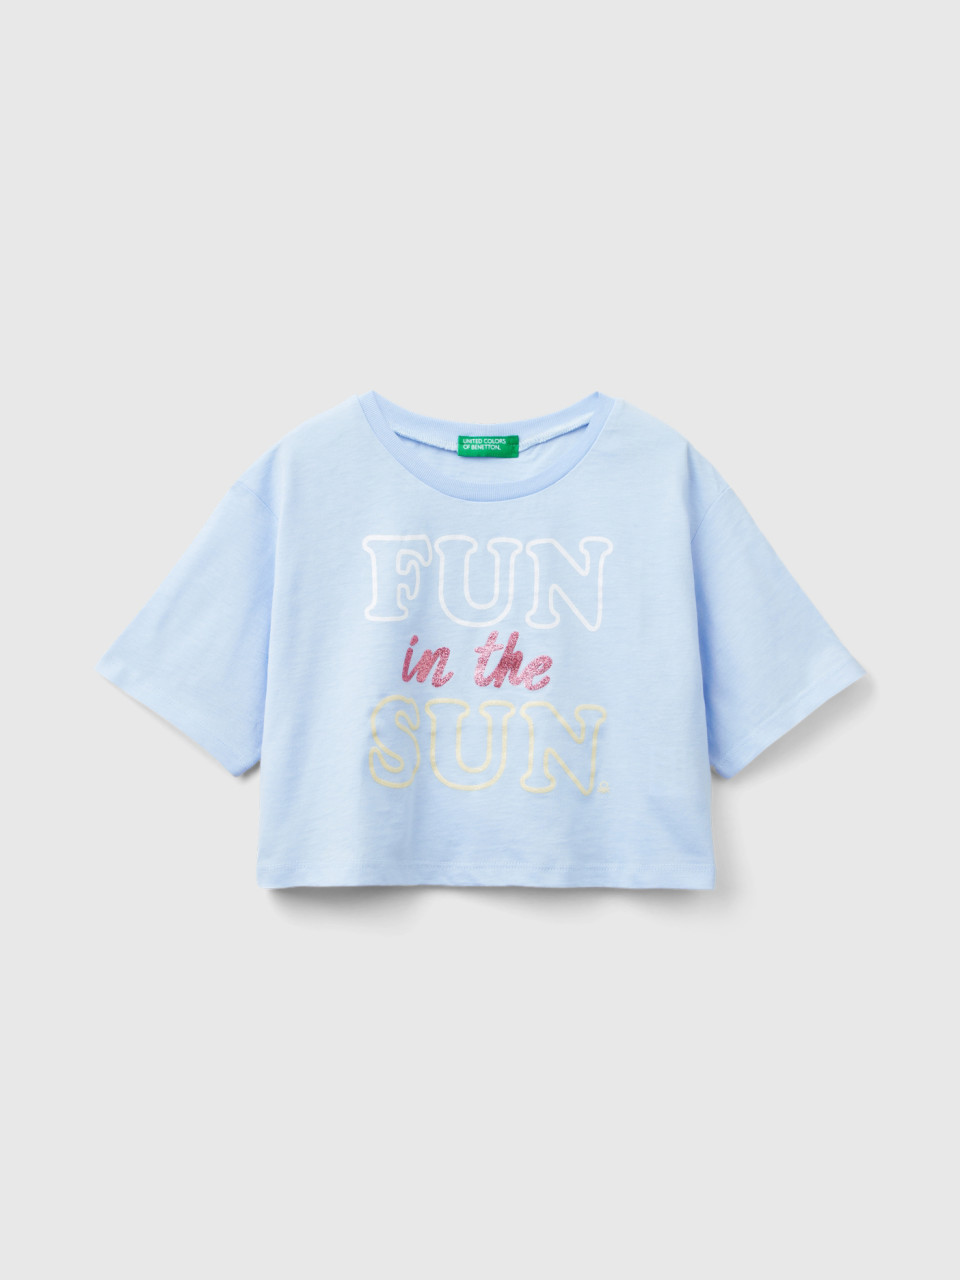 Benetton, T-shirt With Glittery Print, Sky Blue, Kids